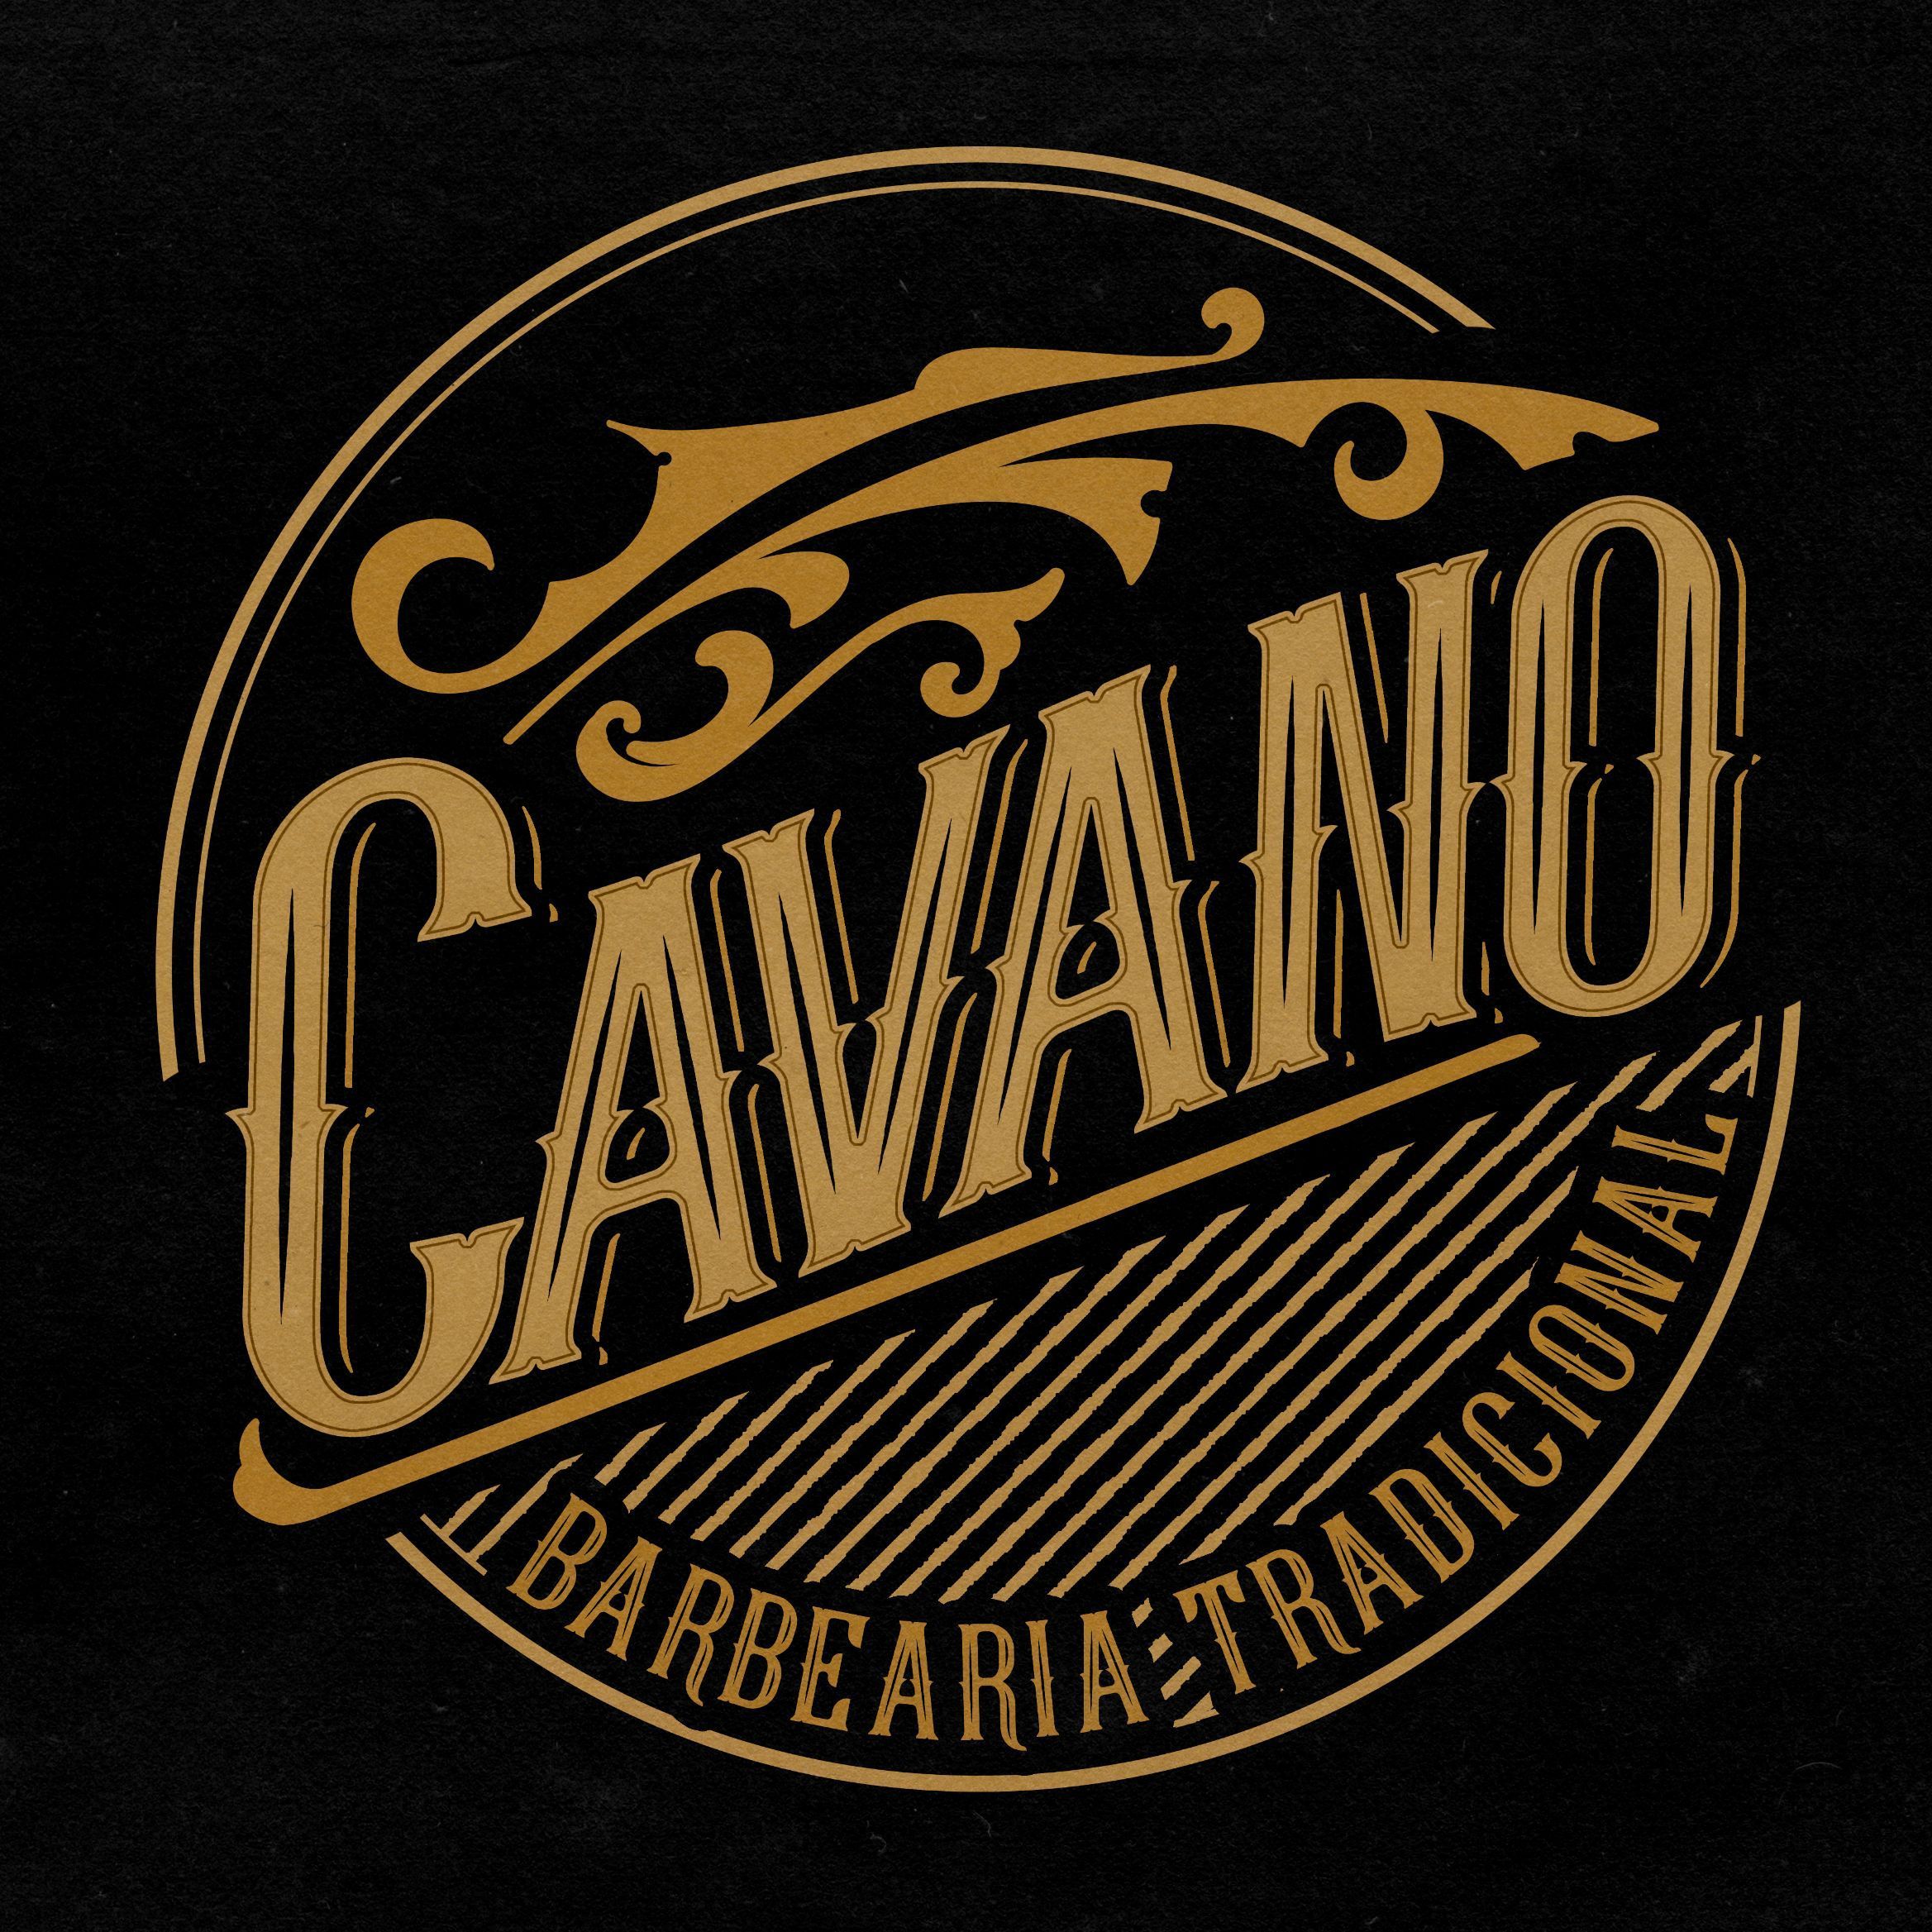 Cavano - Barbearia Tradicional, Rua General Souza Neto, 133, 03502-020, São Paulo